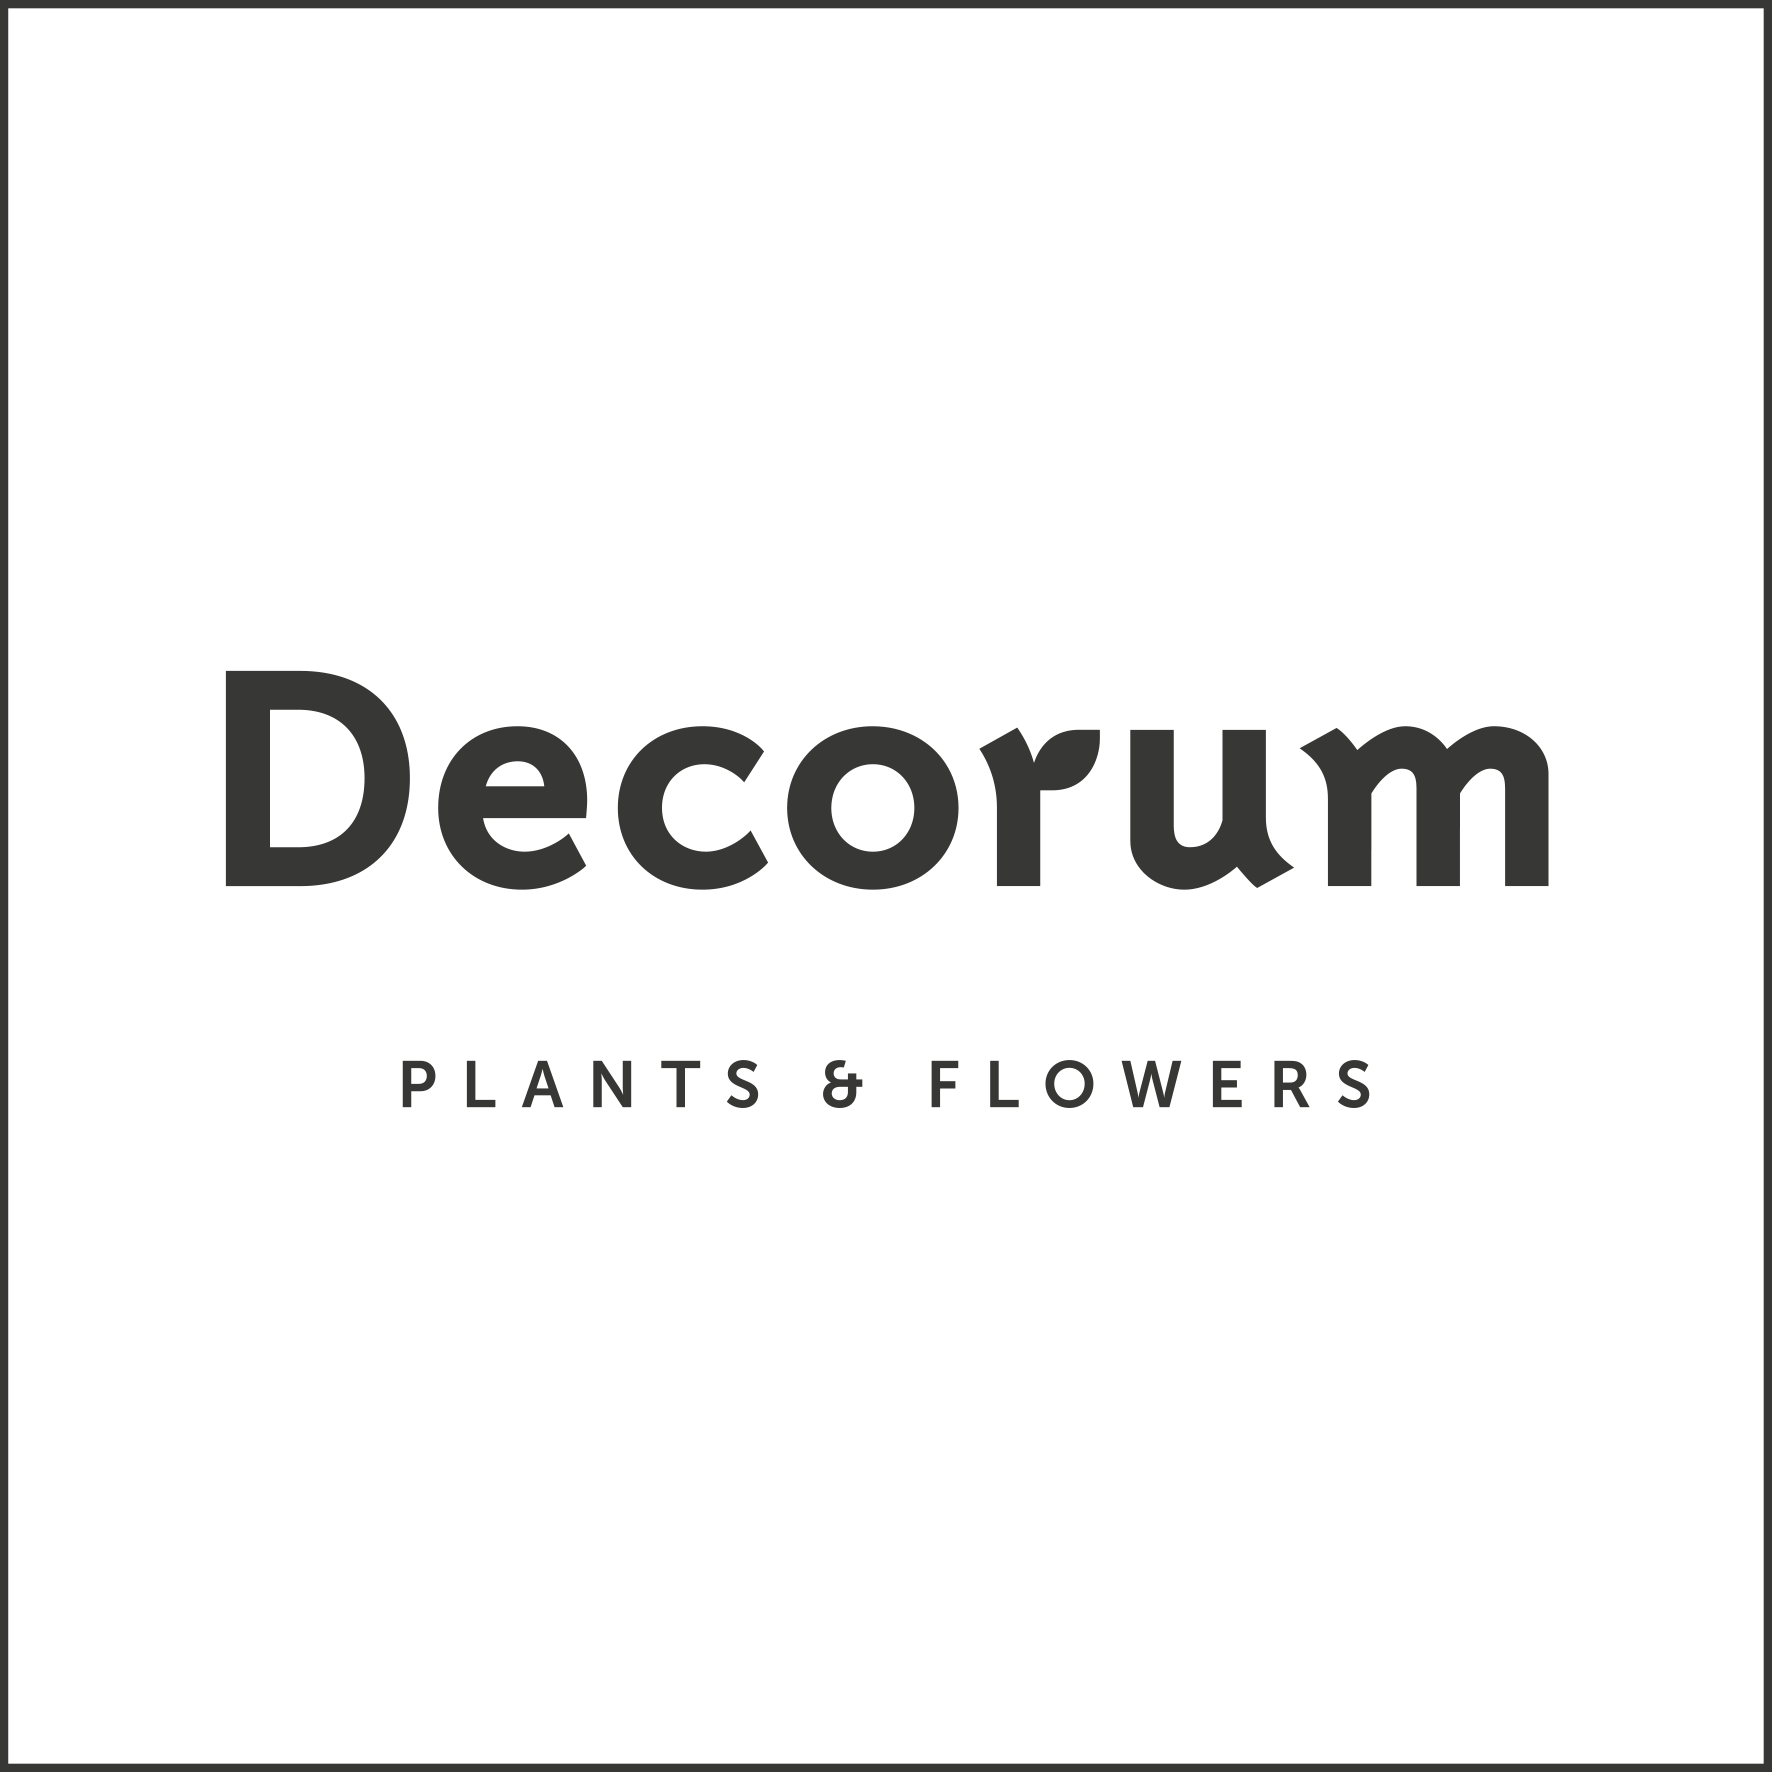 (c) Decorumplantsflowers.com